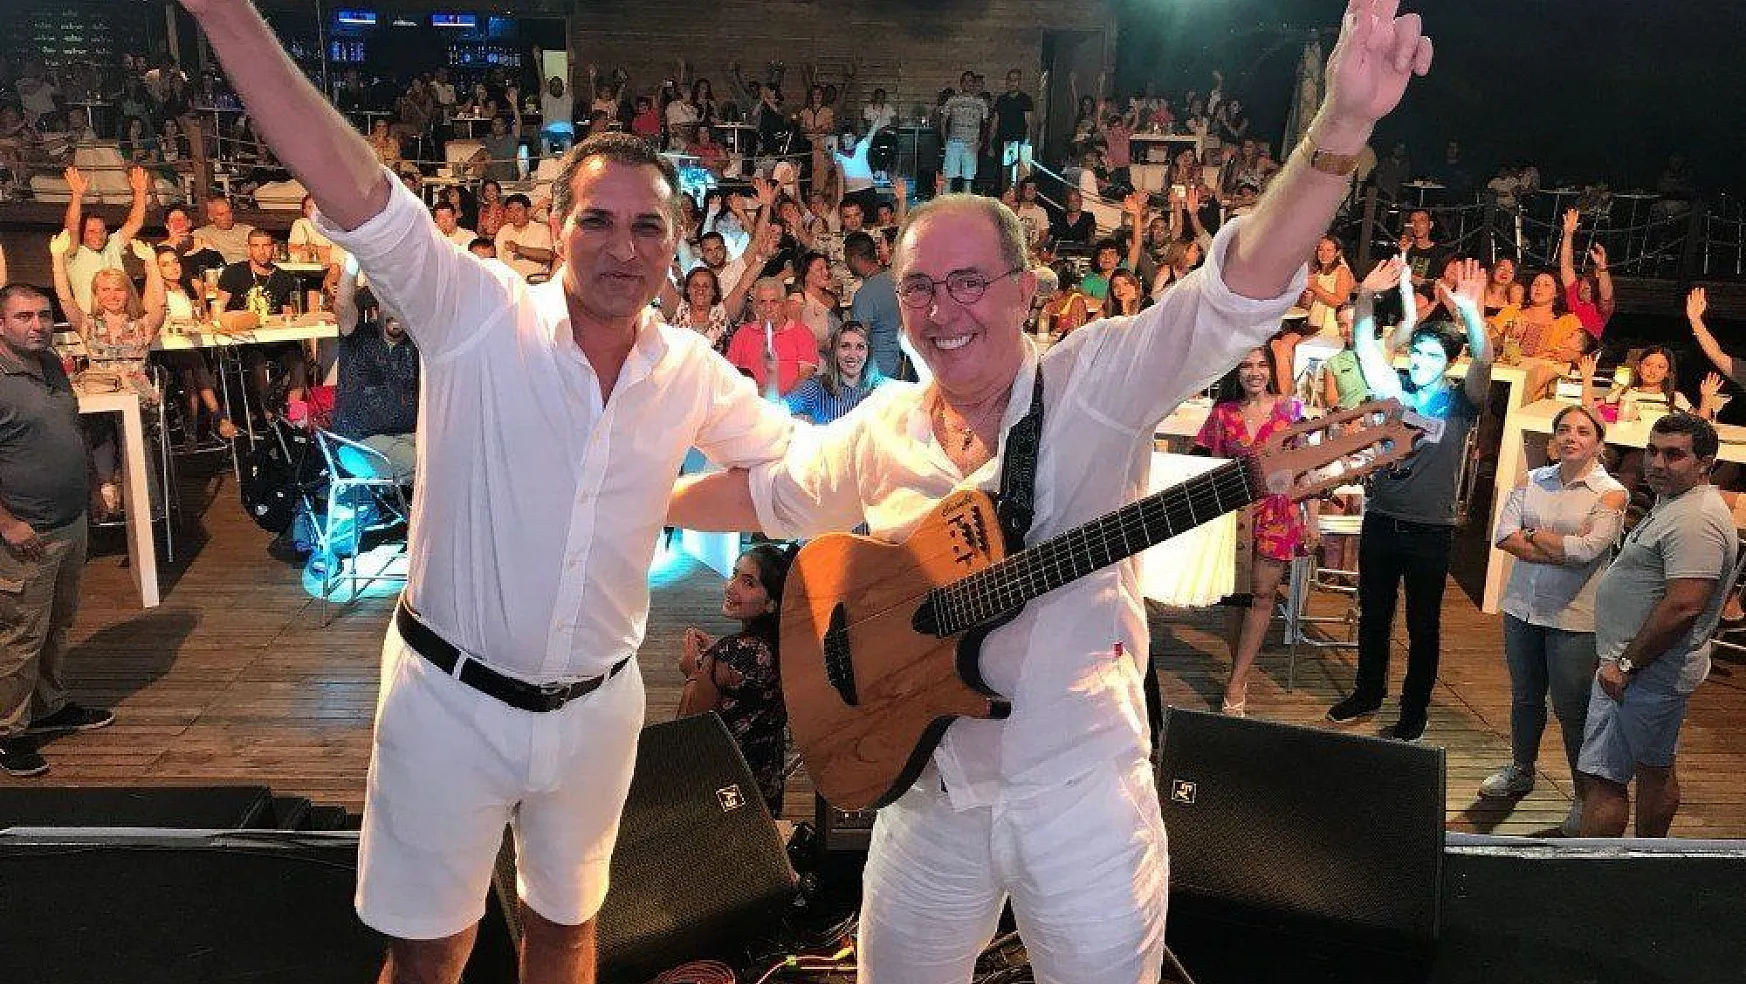 Sinan Erkoç konserinde Rafet El Roman sürprizi